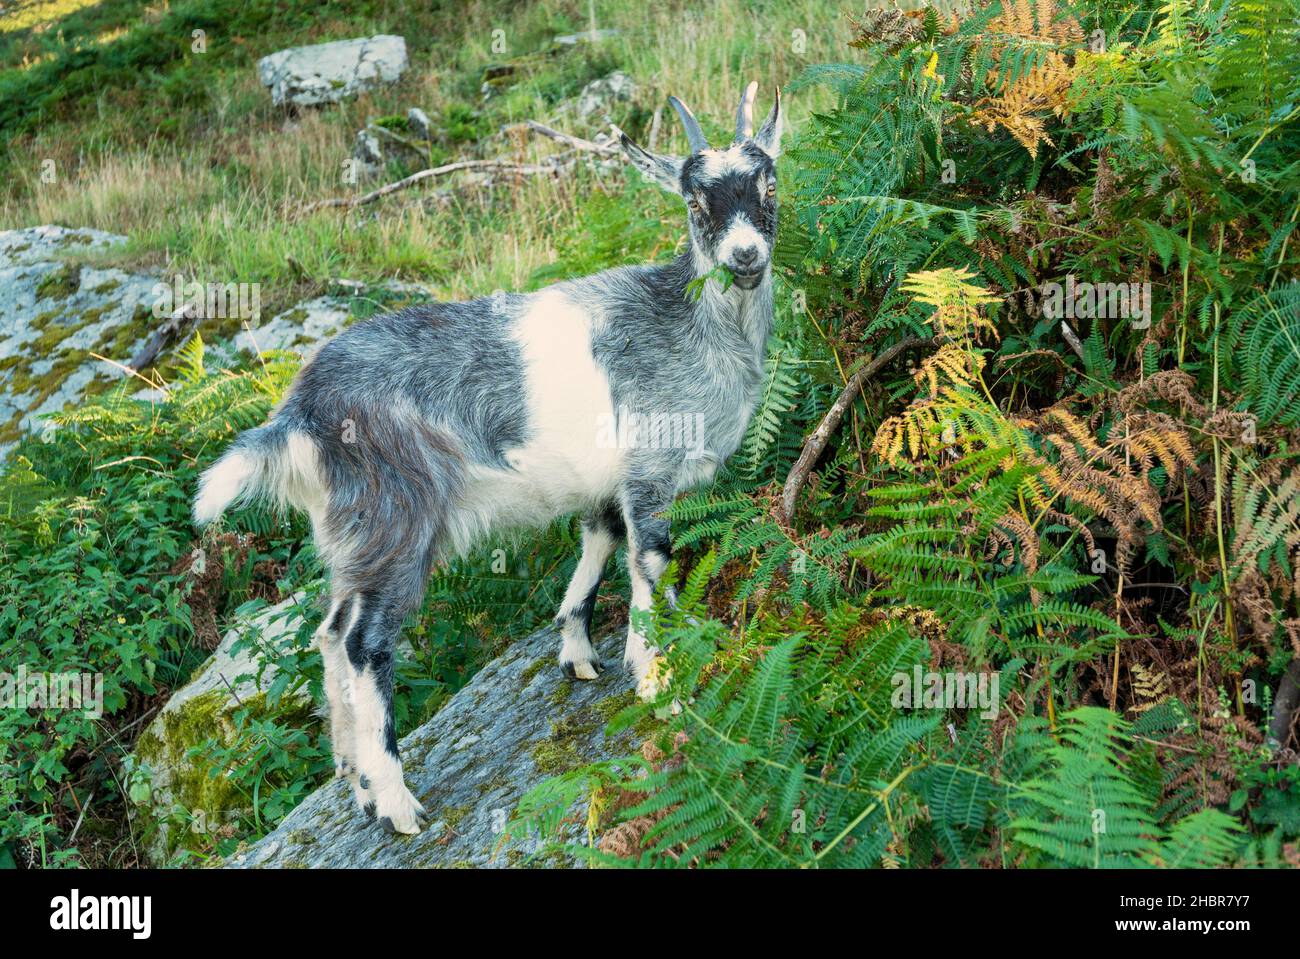 Chèvre sauvage dans le parc national Valley of the Rocks Exmoor près de Lynton et Lynmouth Devon Angleterre GB Europe Banque D'Images